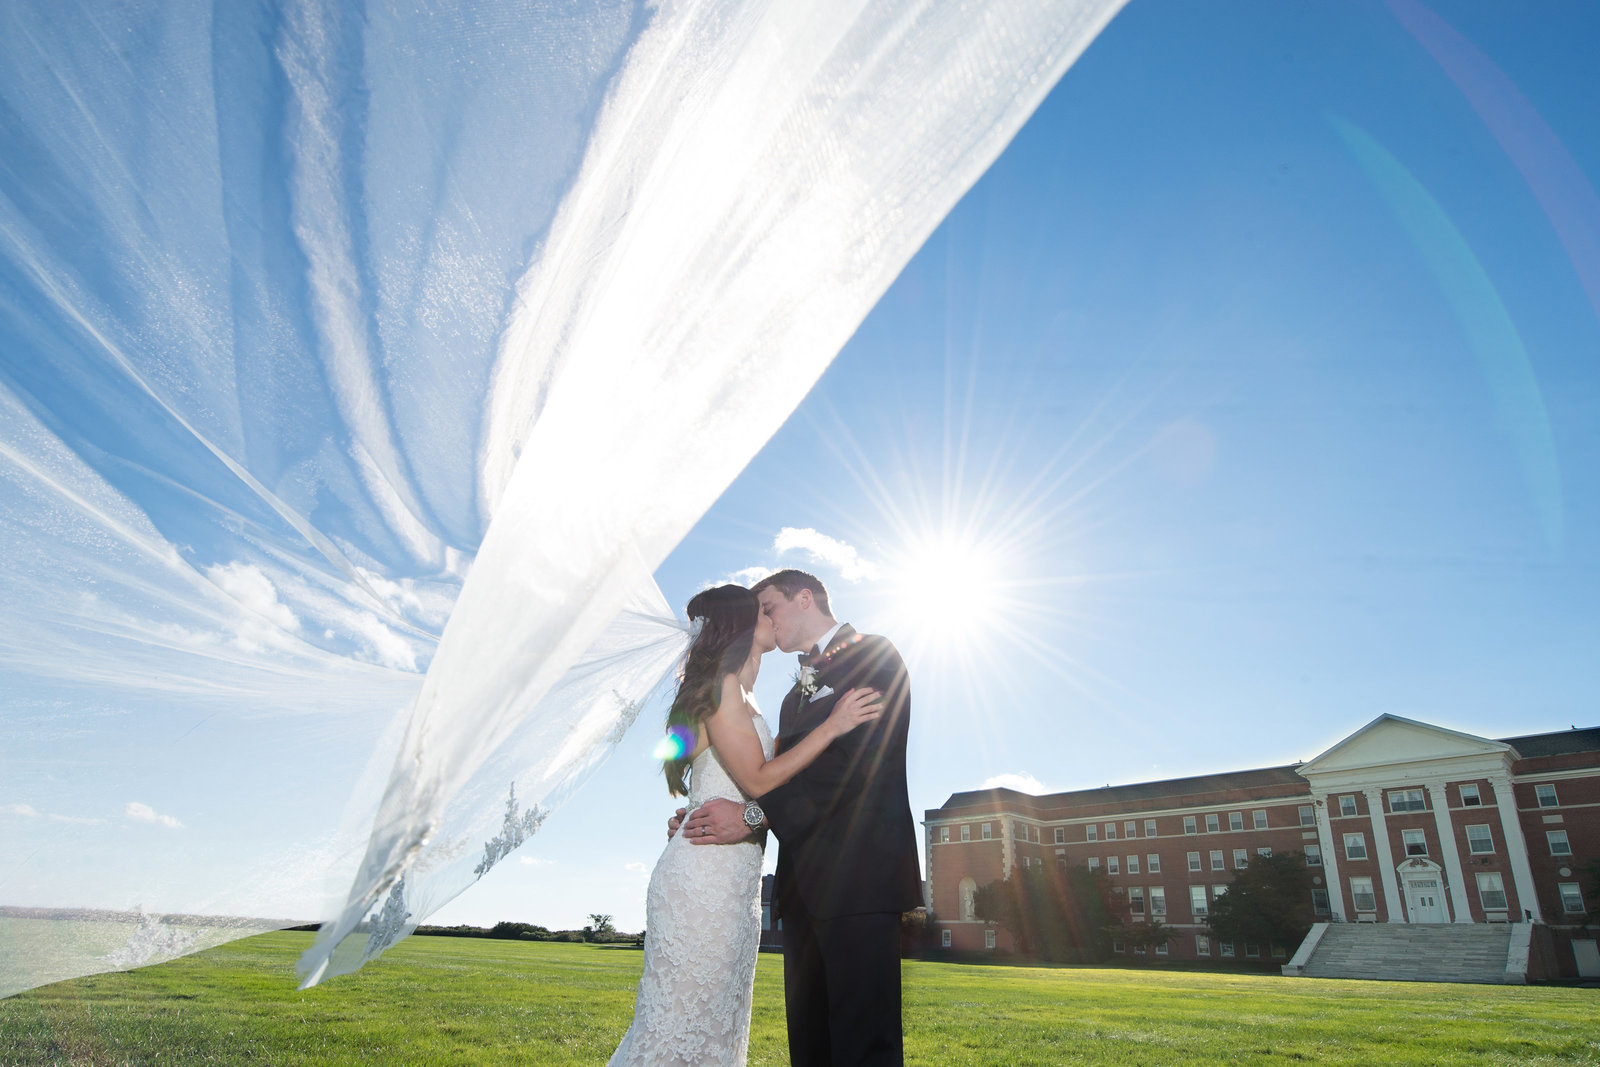 Veil wedding photo at the Bourne Mansion